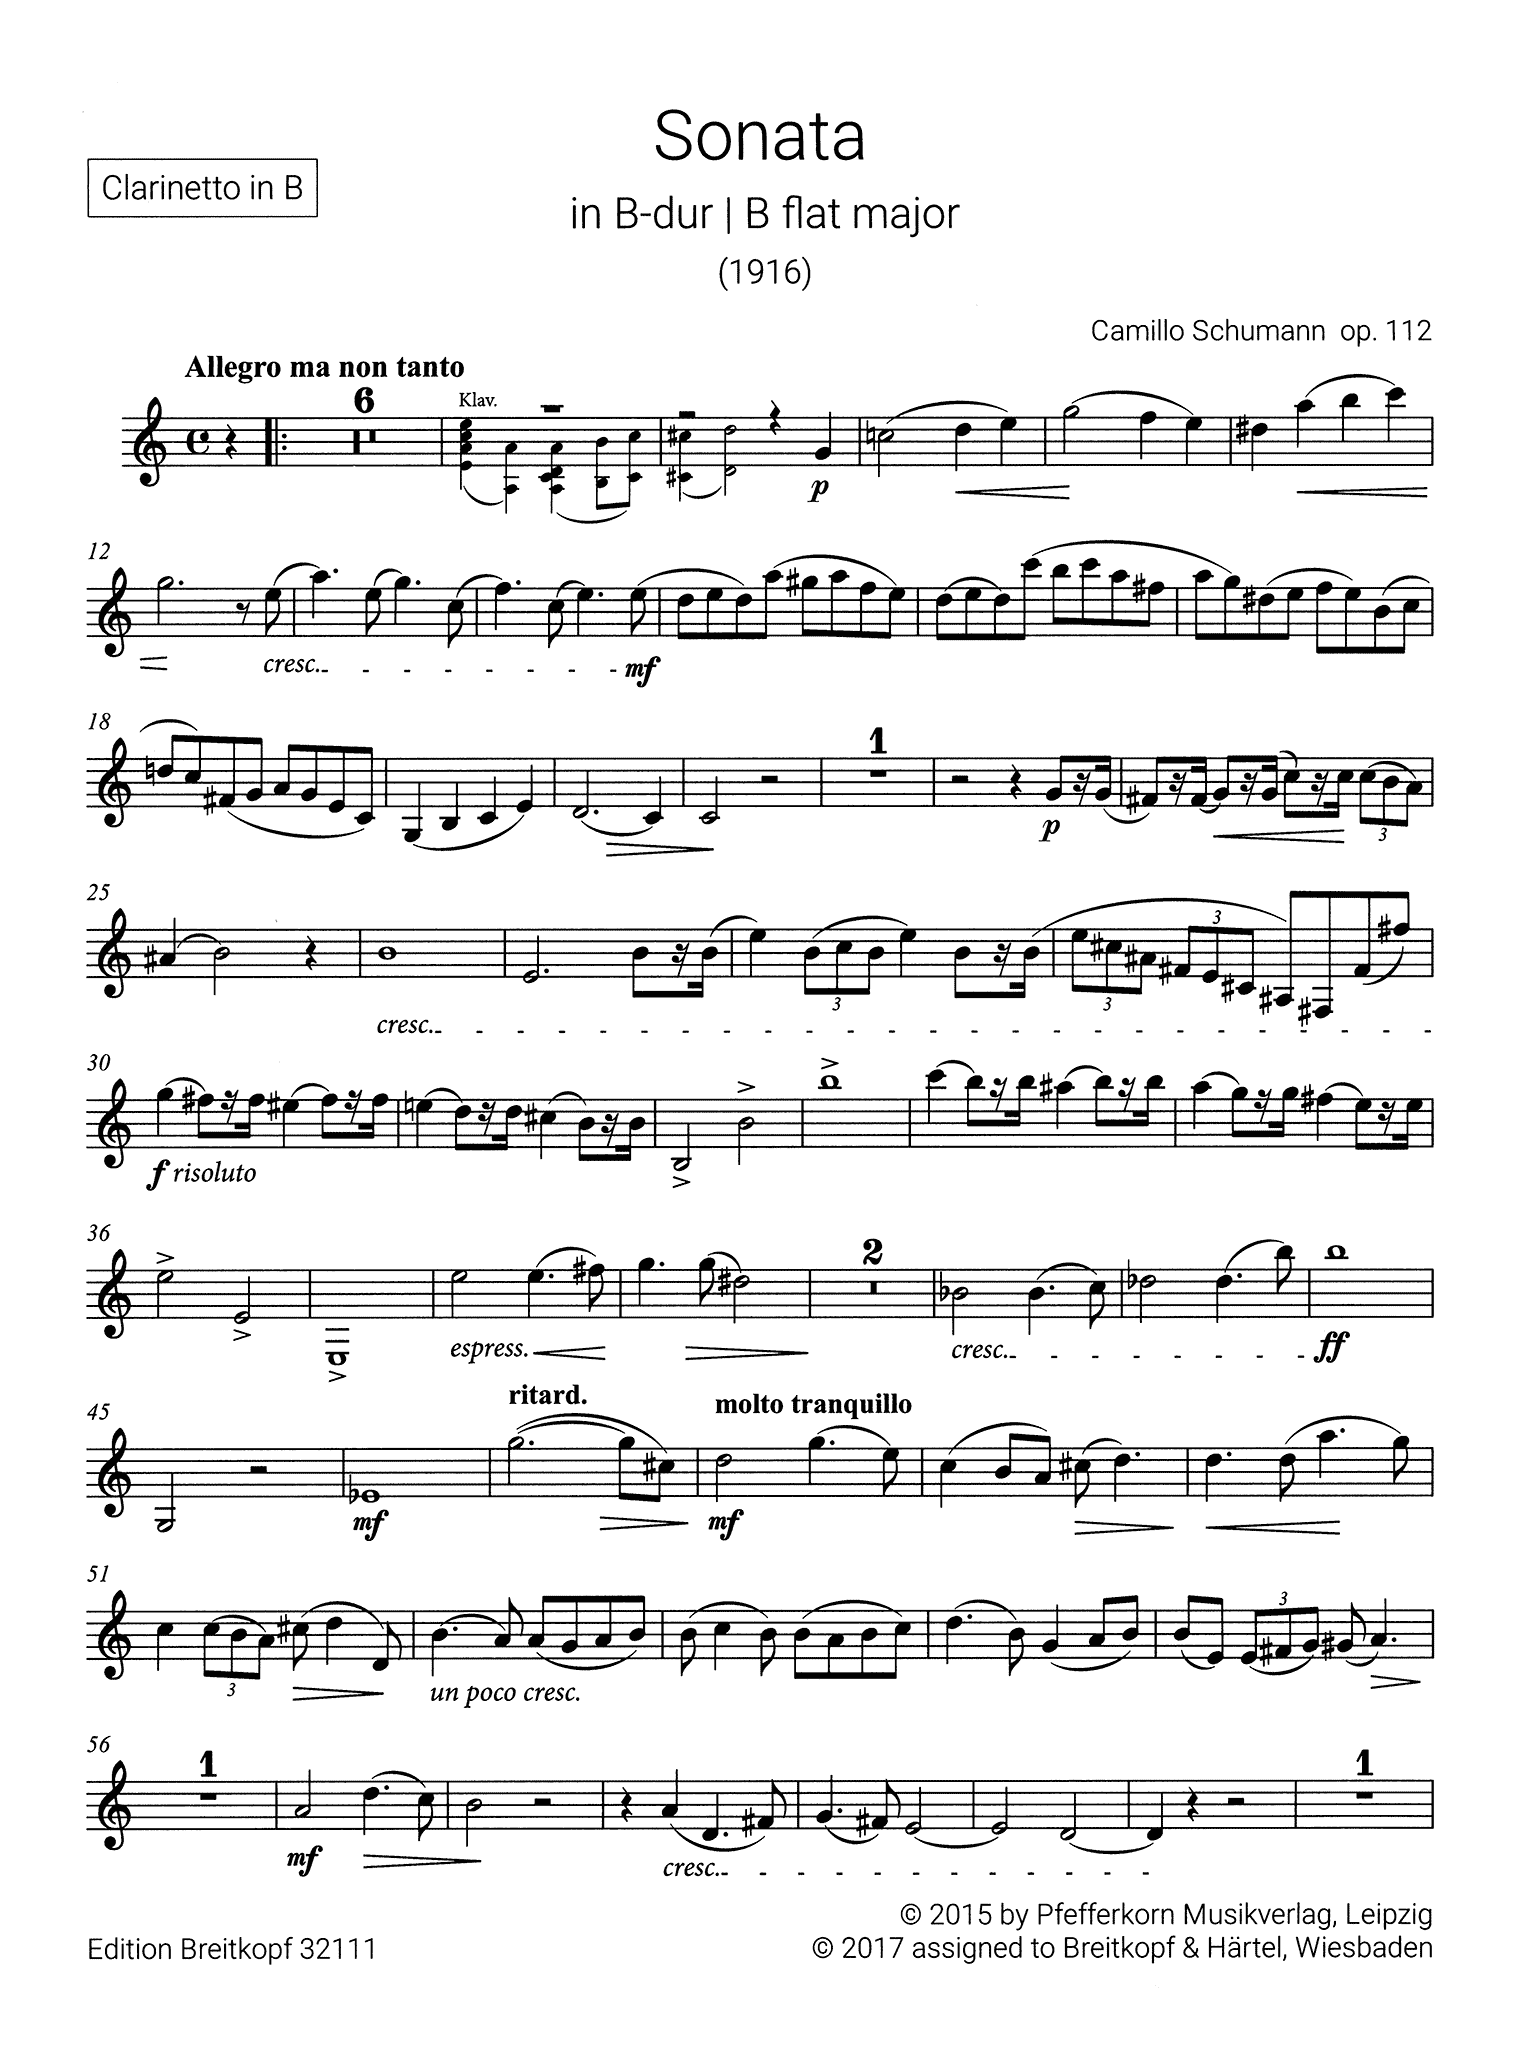 Camillo Schumann Sonata No. 1 in B-flat Major, Op. 112 clarinet & piano solo part